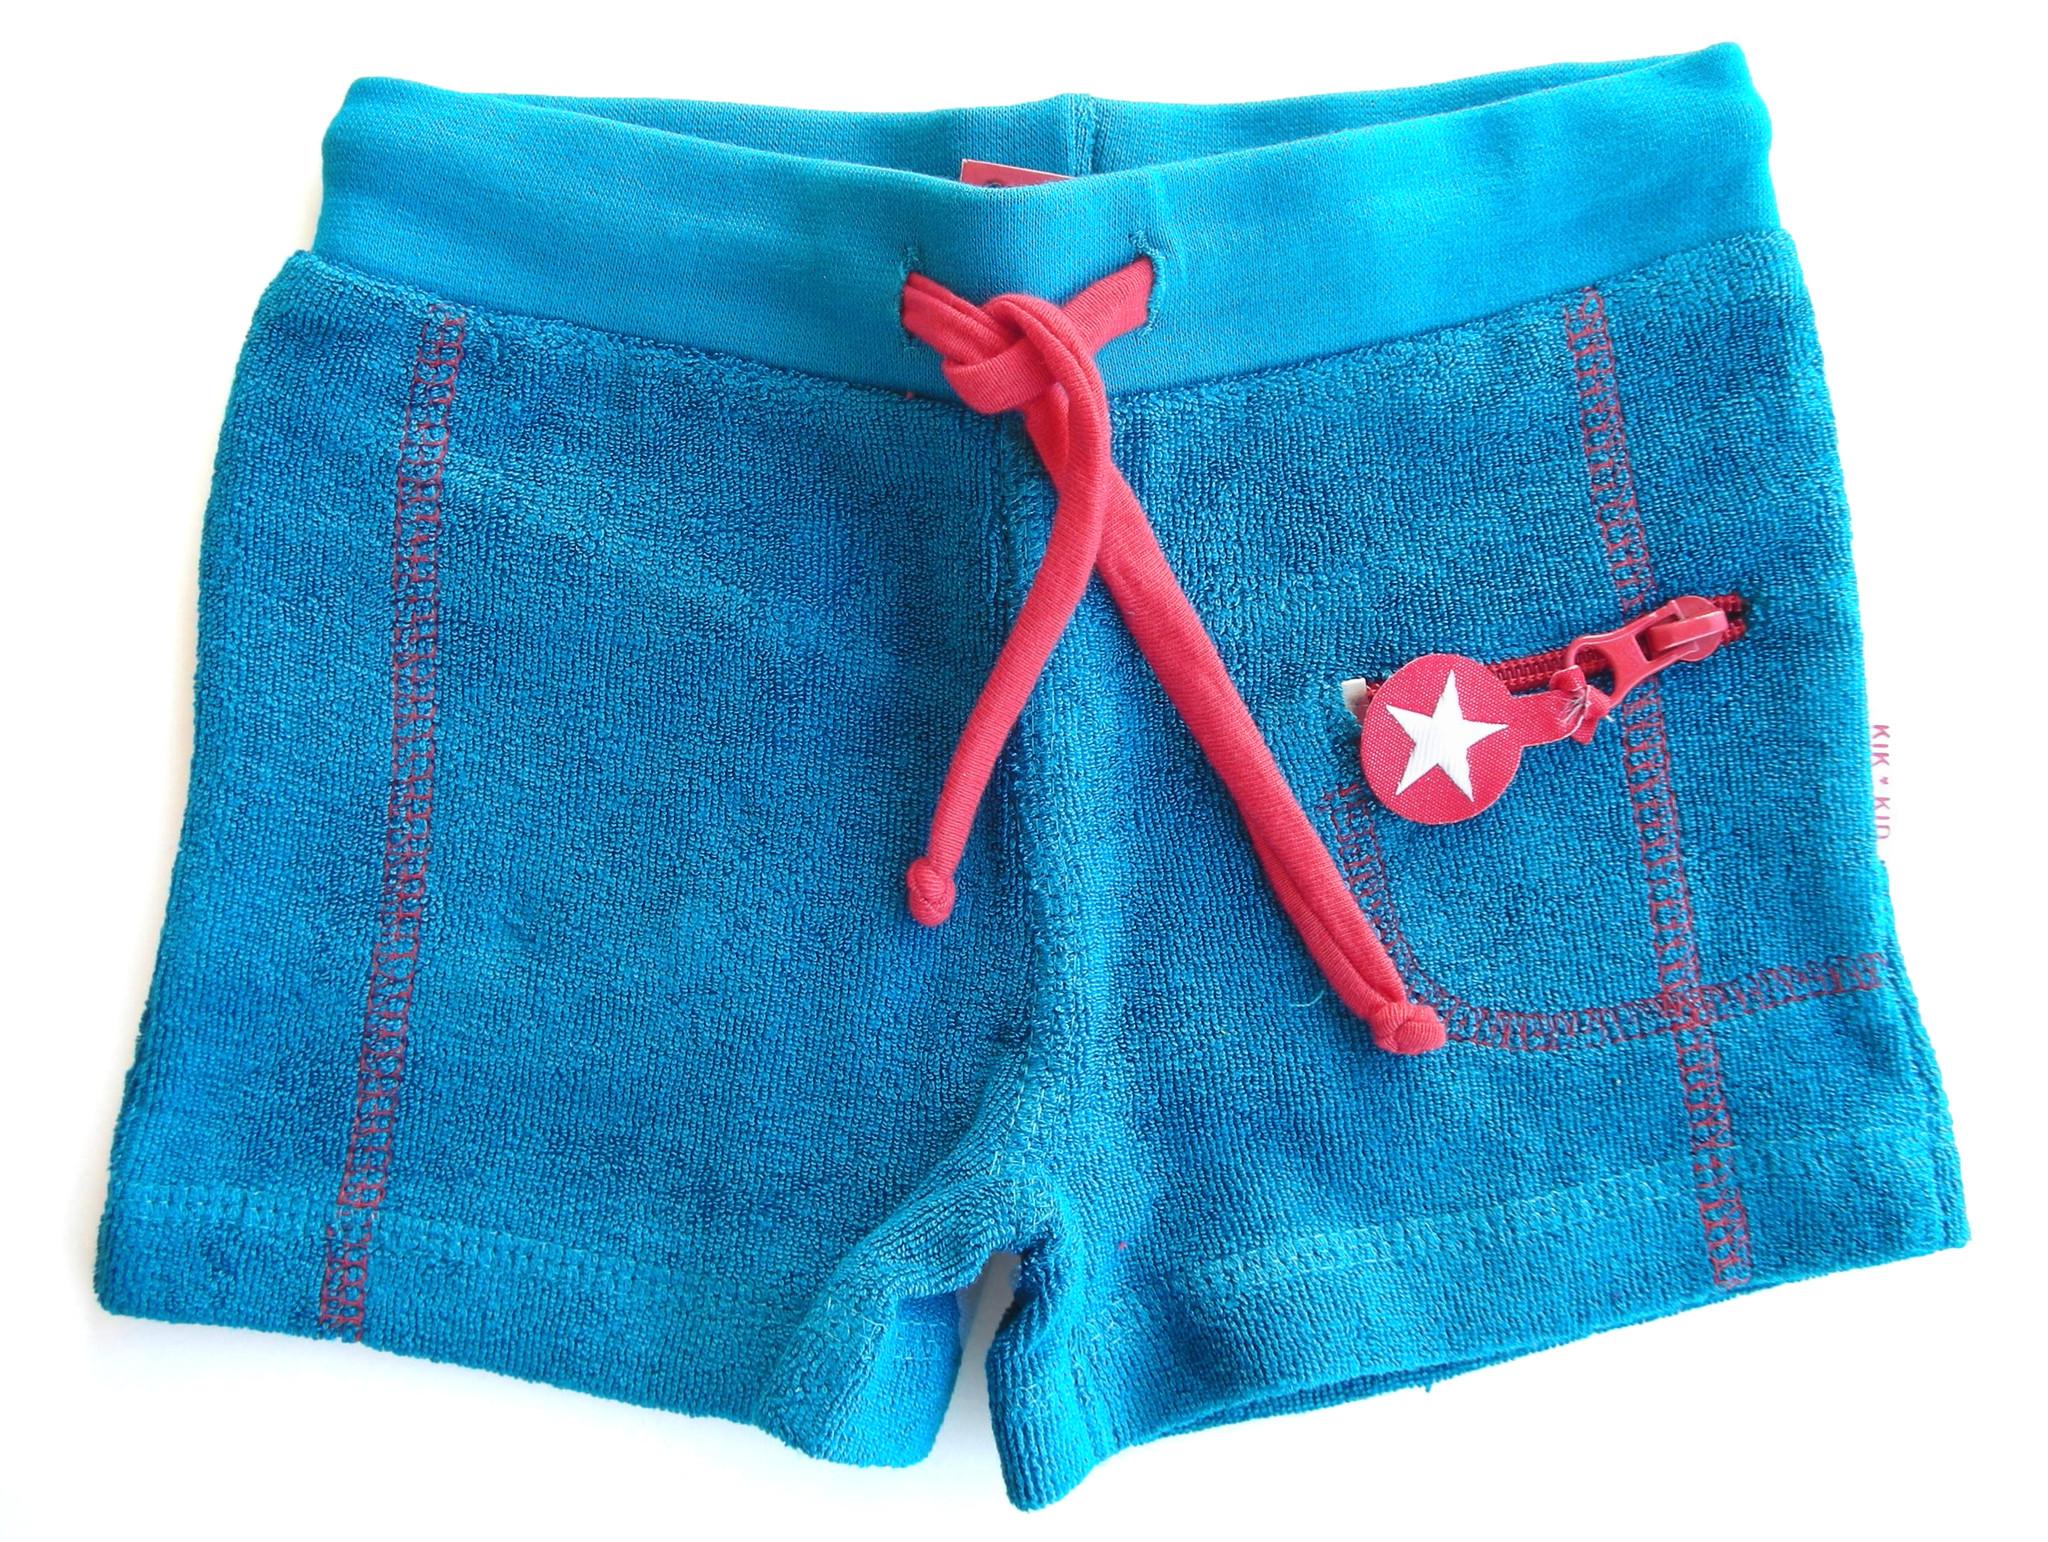 Foto Baby shorts de KIK-KID, pantalón corto azul